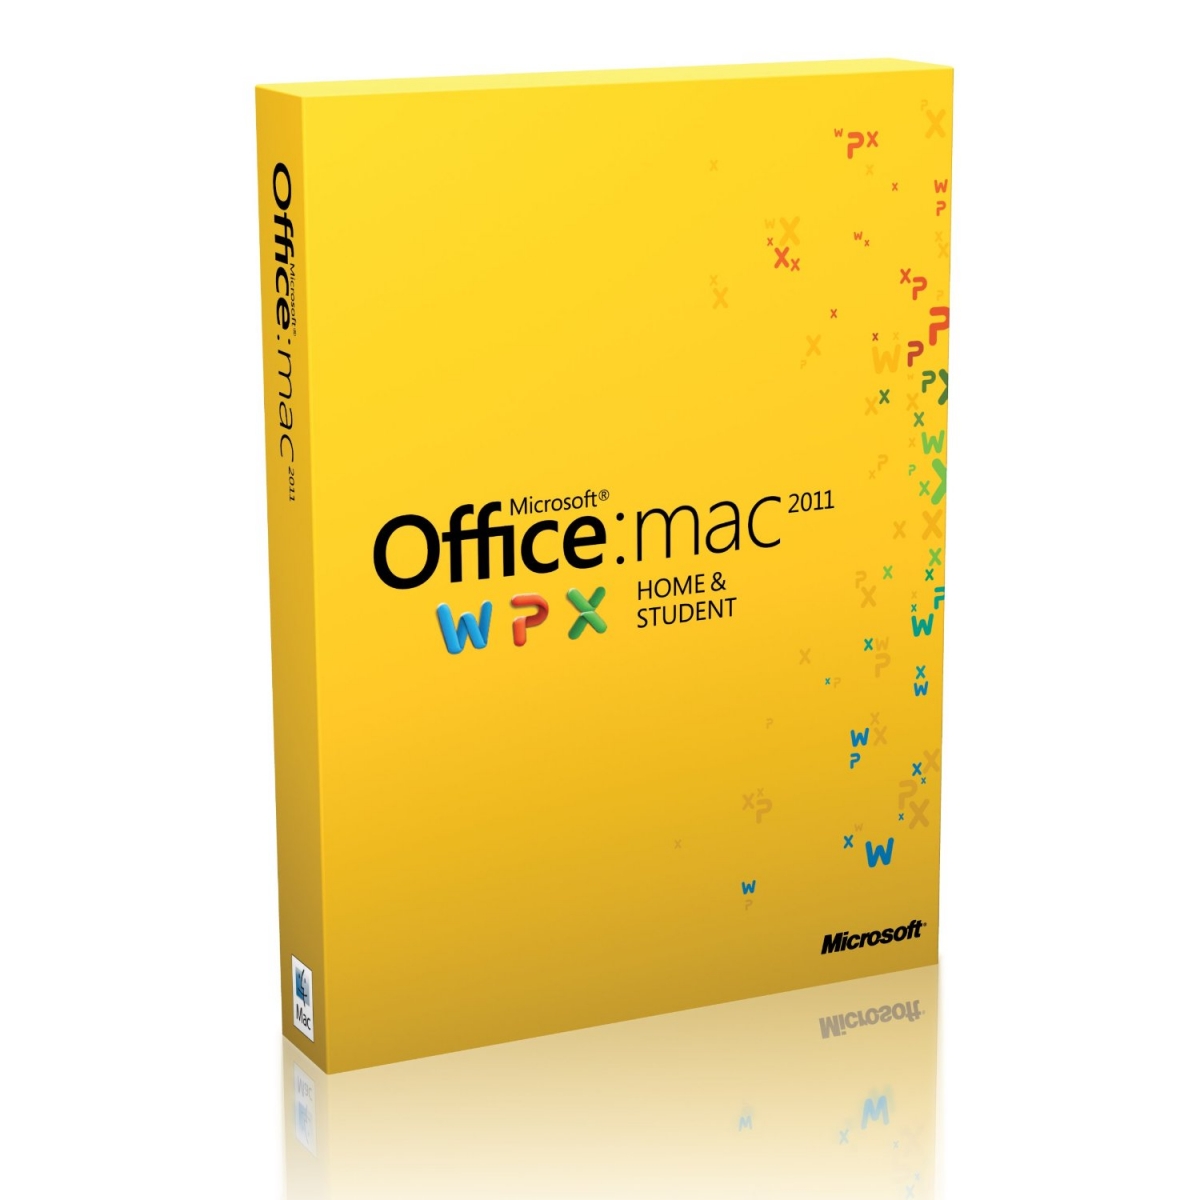 Microsoft office 2011 macos high sierra